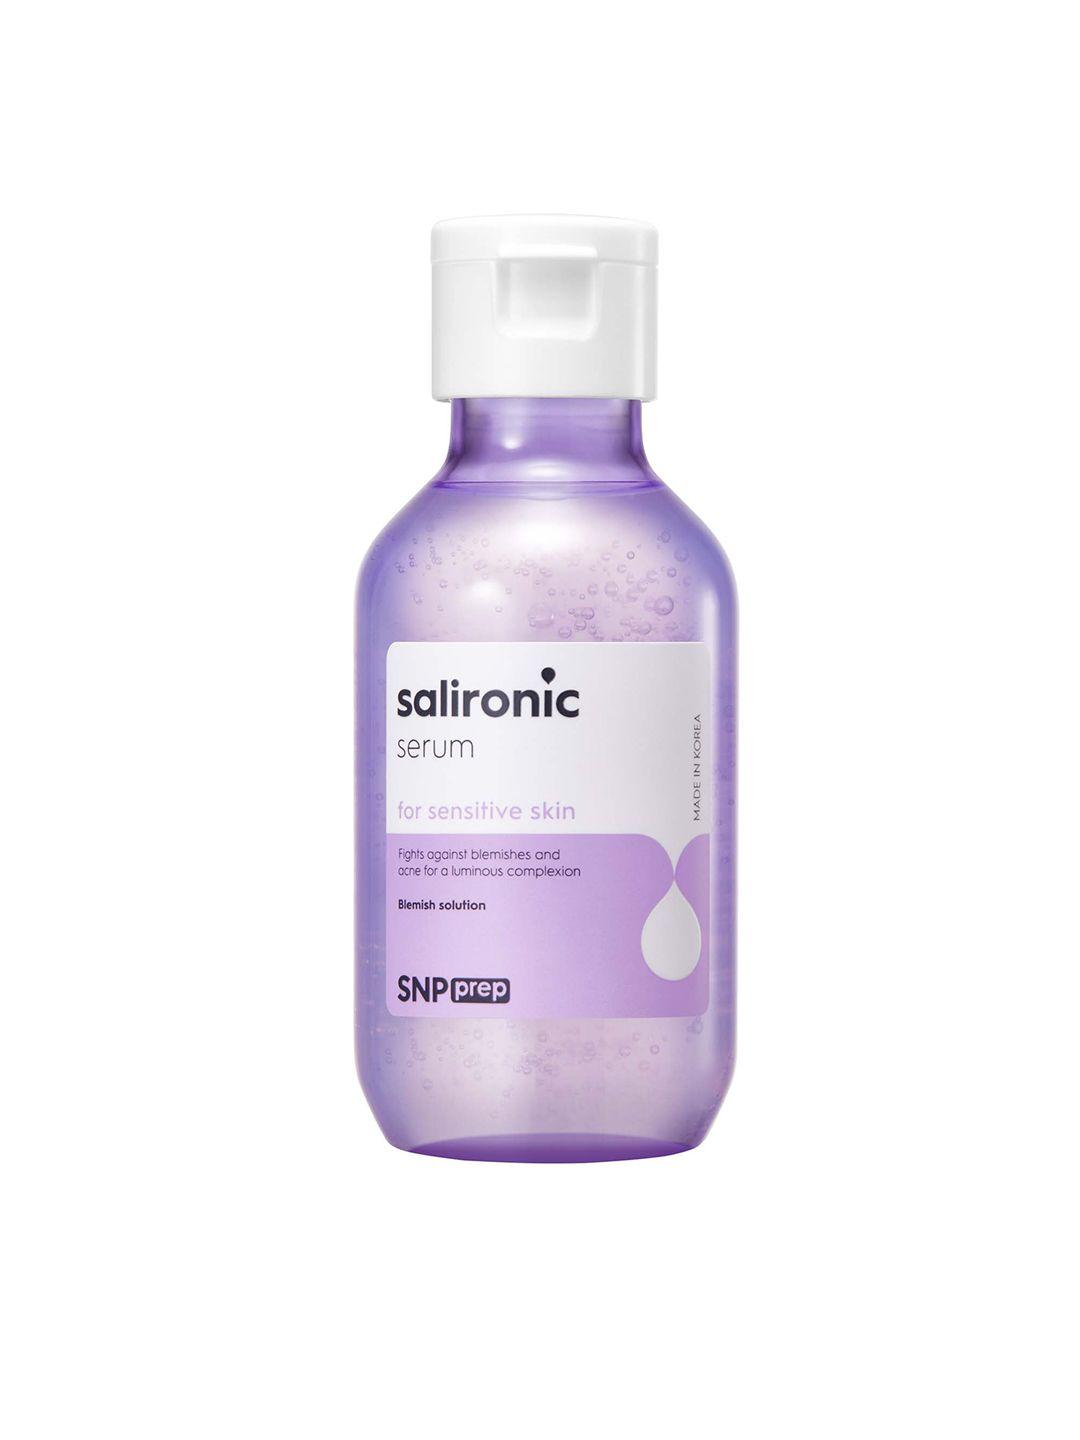 snp prep salironic serum with hyaluronic acid for sensitive skin - 110ml